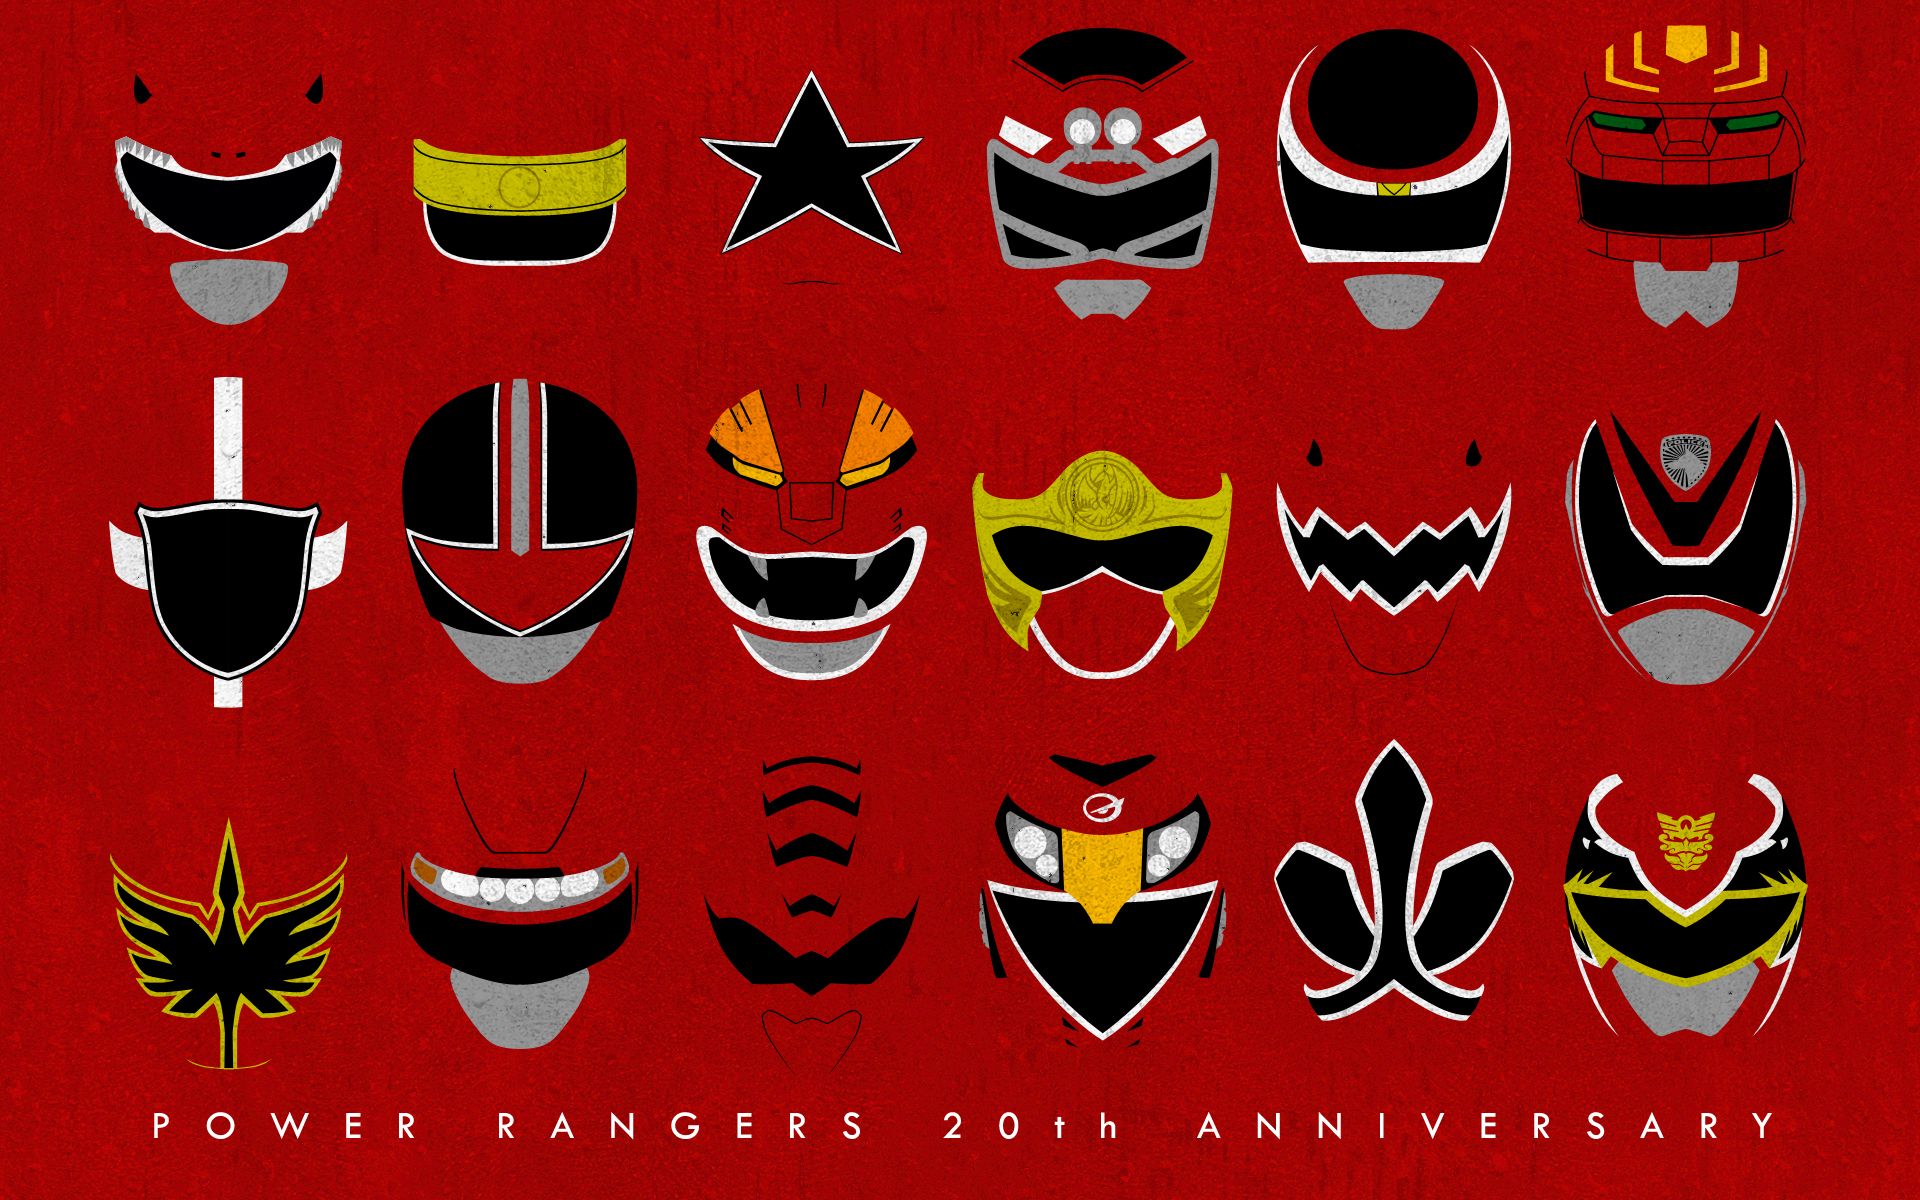 Power Rangers 20th Anniversary Red Ranger Wallpaper by Stonewolf - Fur Affinity [dot] net